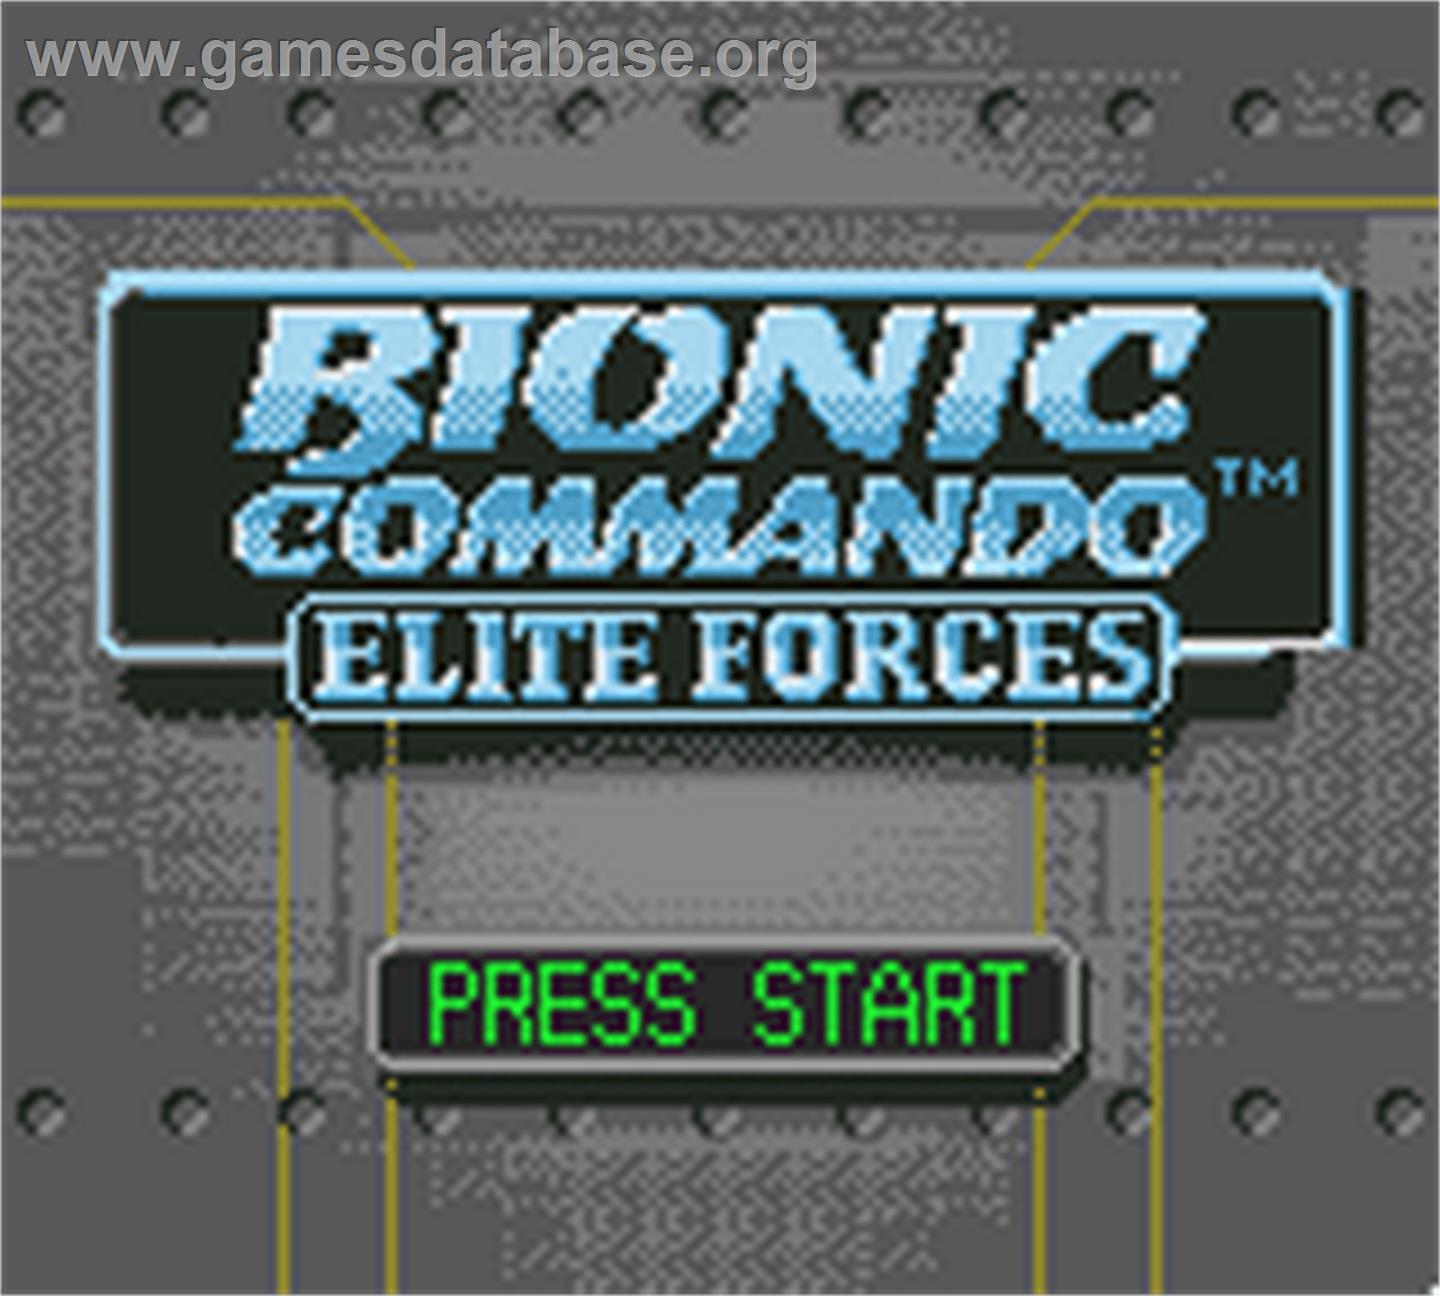 Bionic Commando: Elite Forces - Nintendo Game Boy Color - Artwork - Title Screen